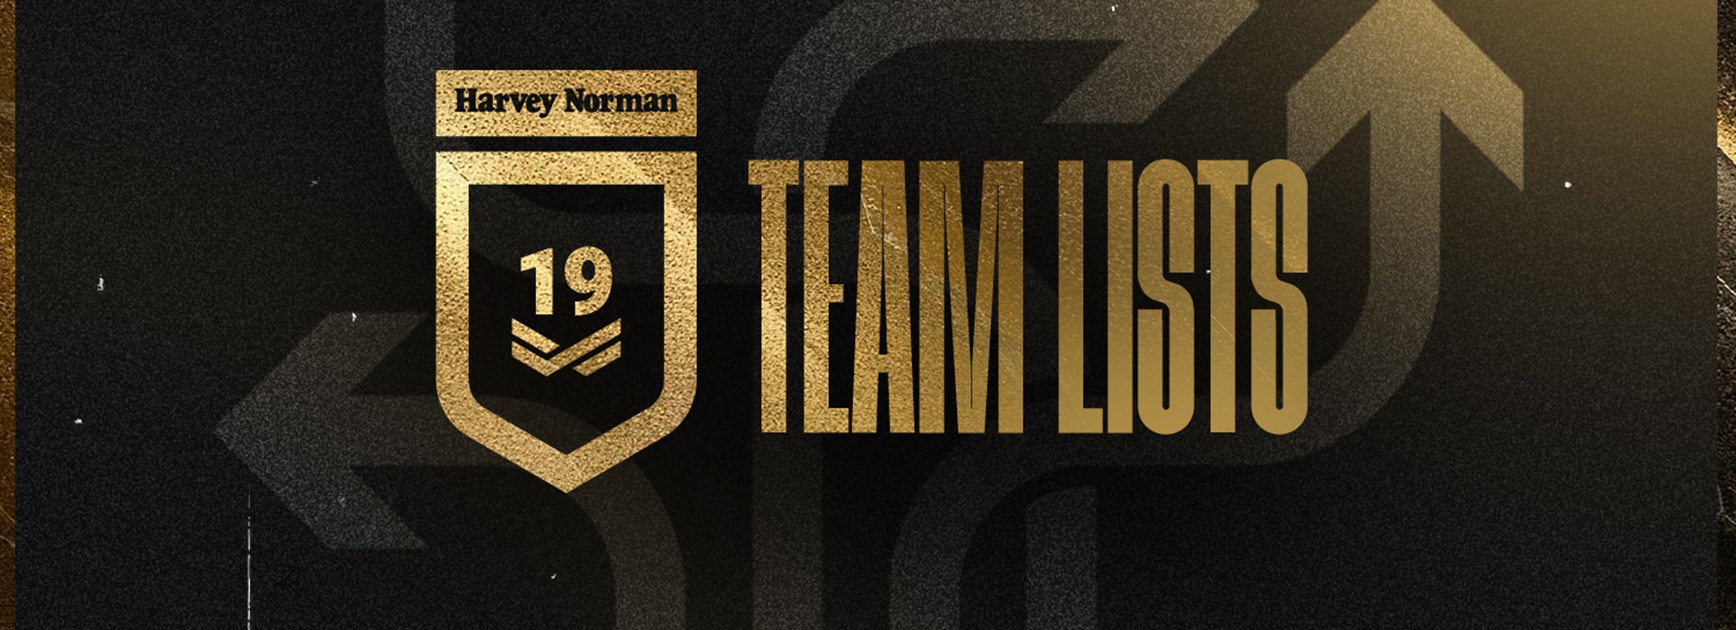 Harvey Norman Under 19 grand final team lists